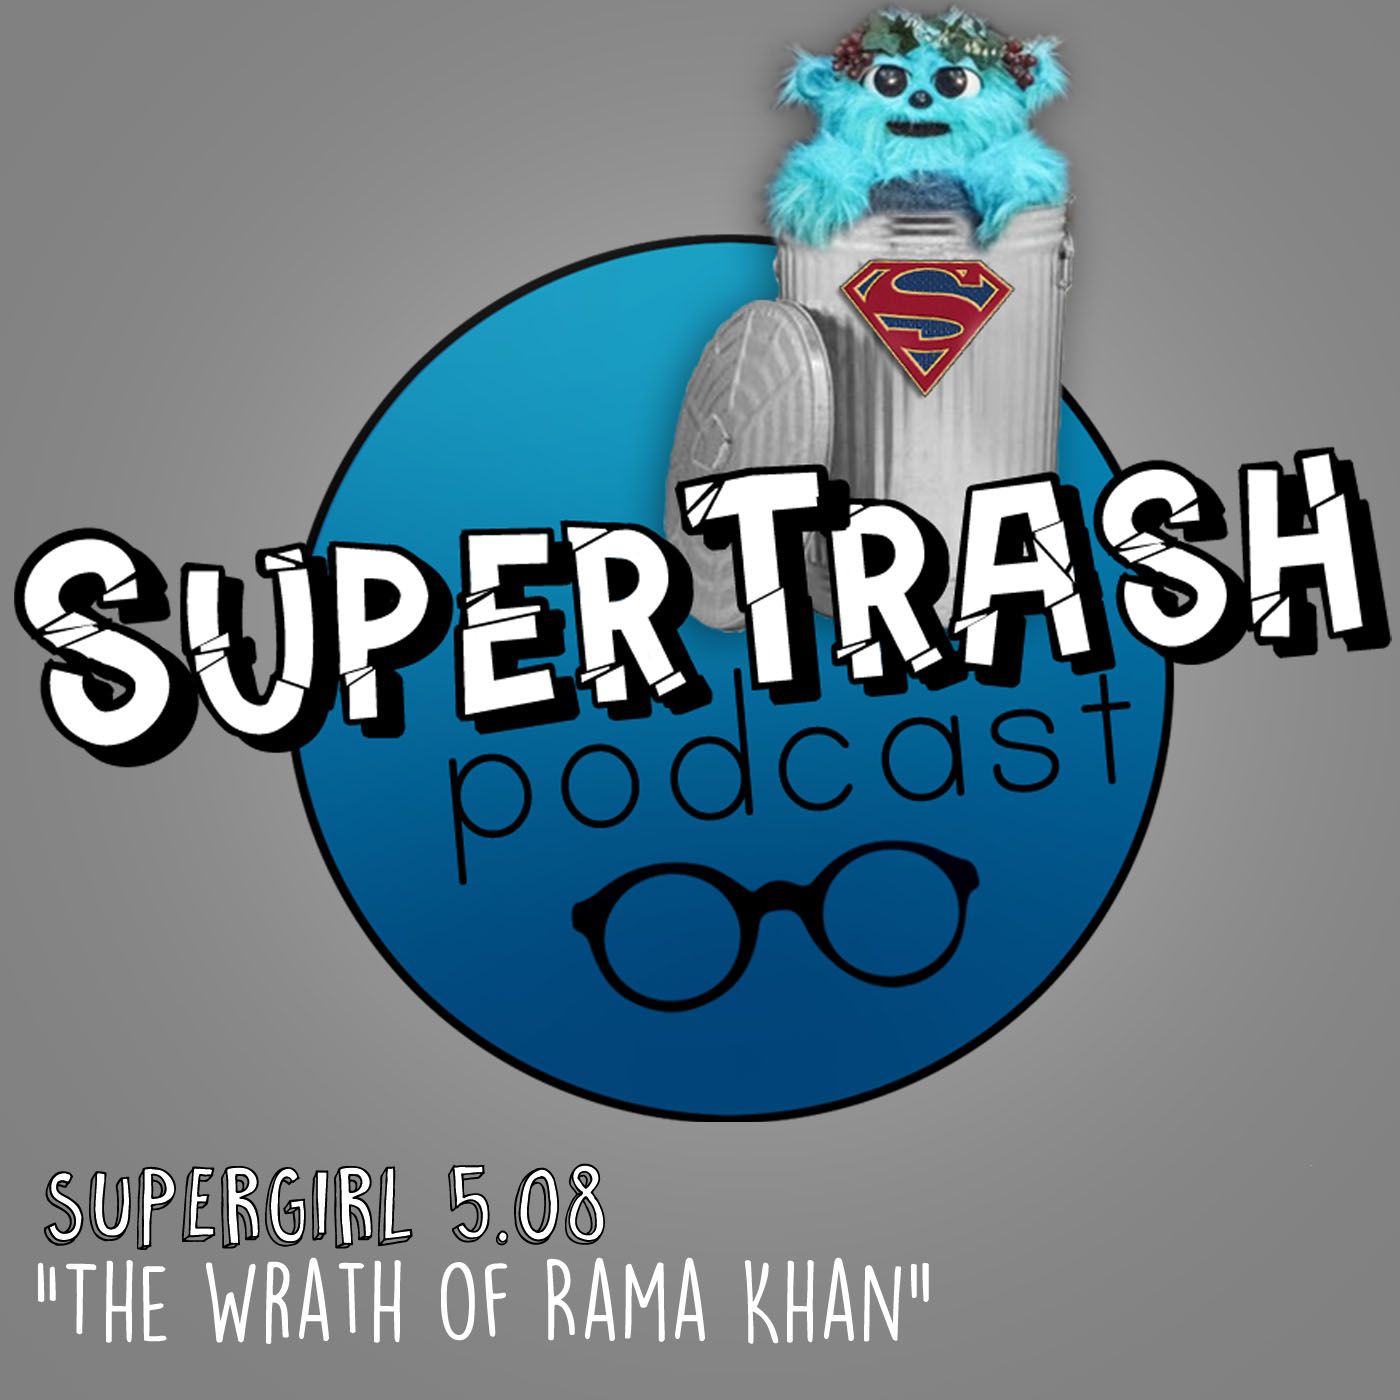 ’Supergirl’ Episode 5.08 ”The Wrath of Rama Khan”